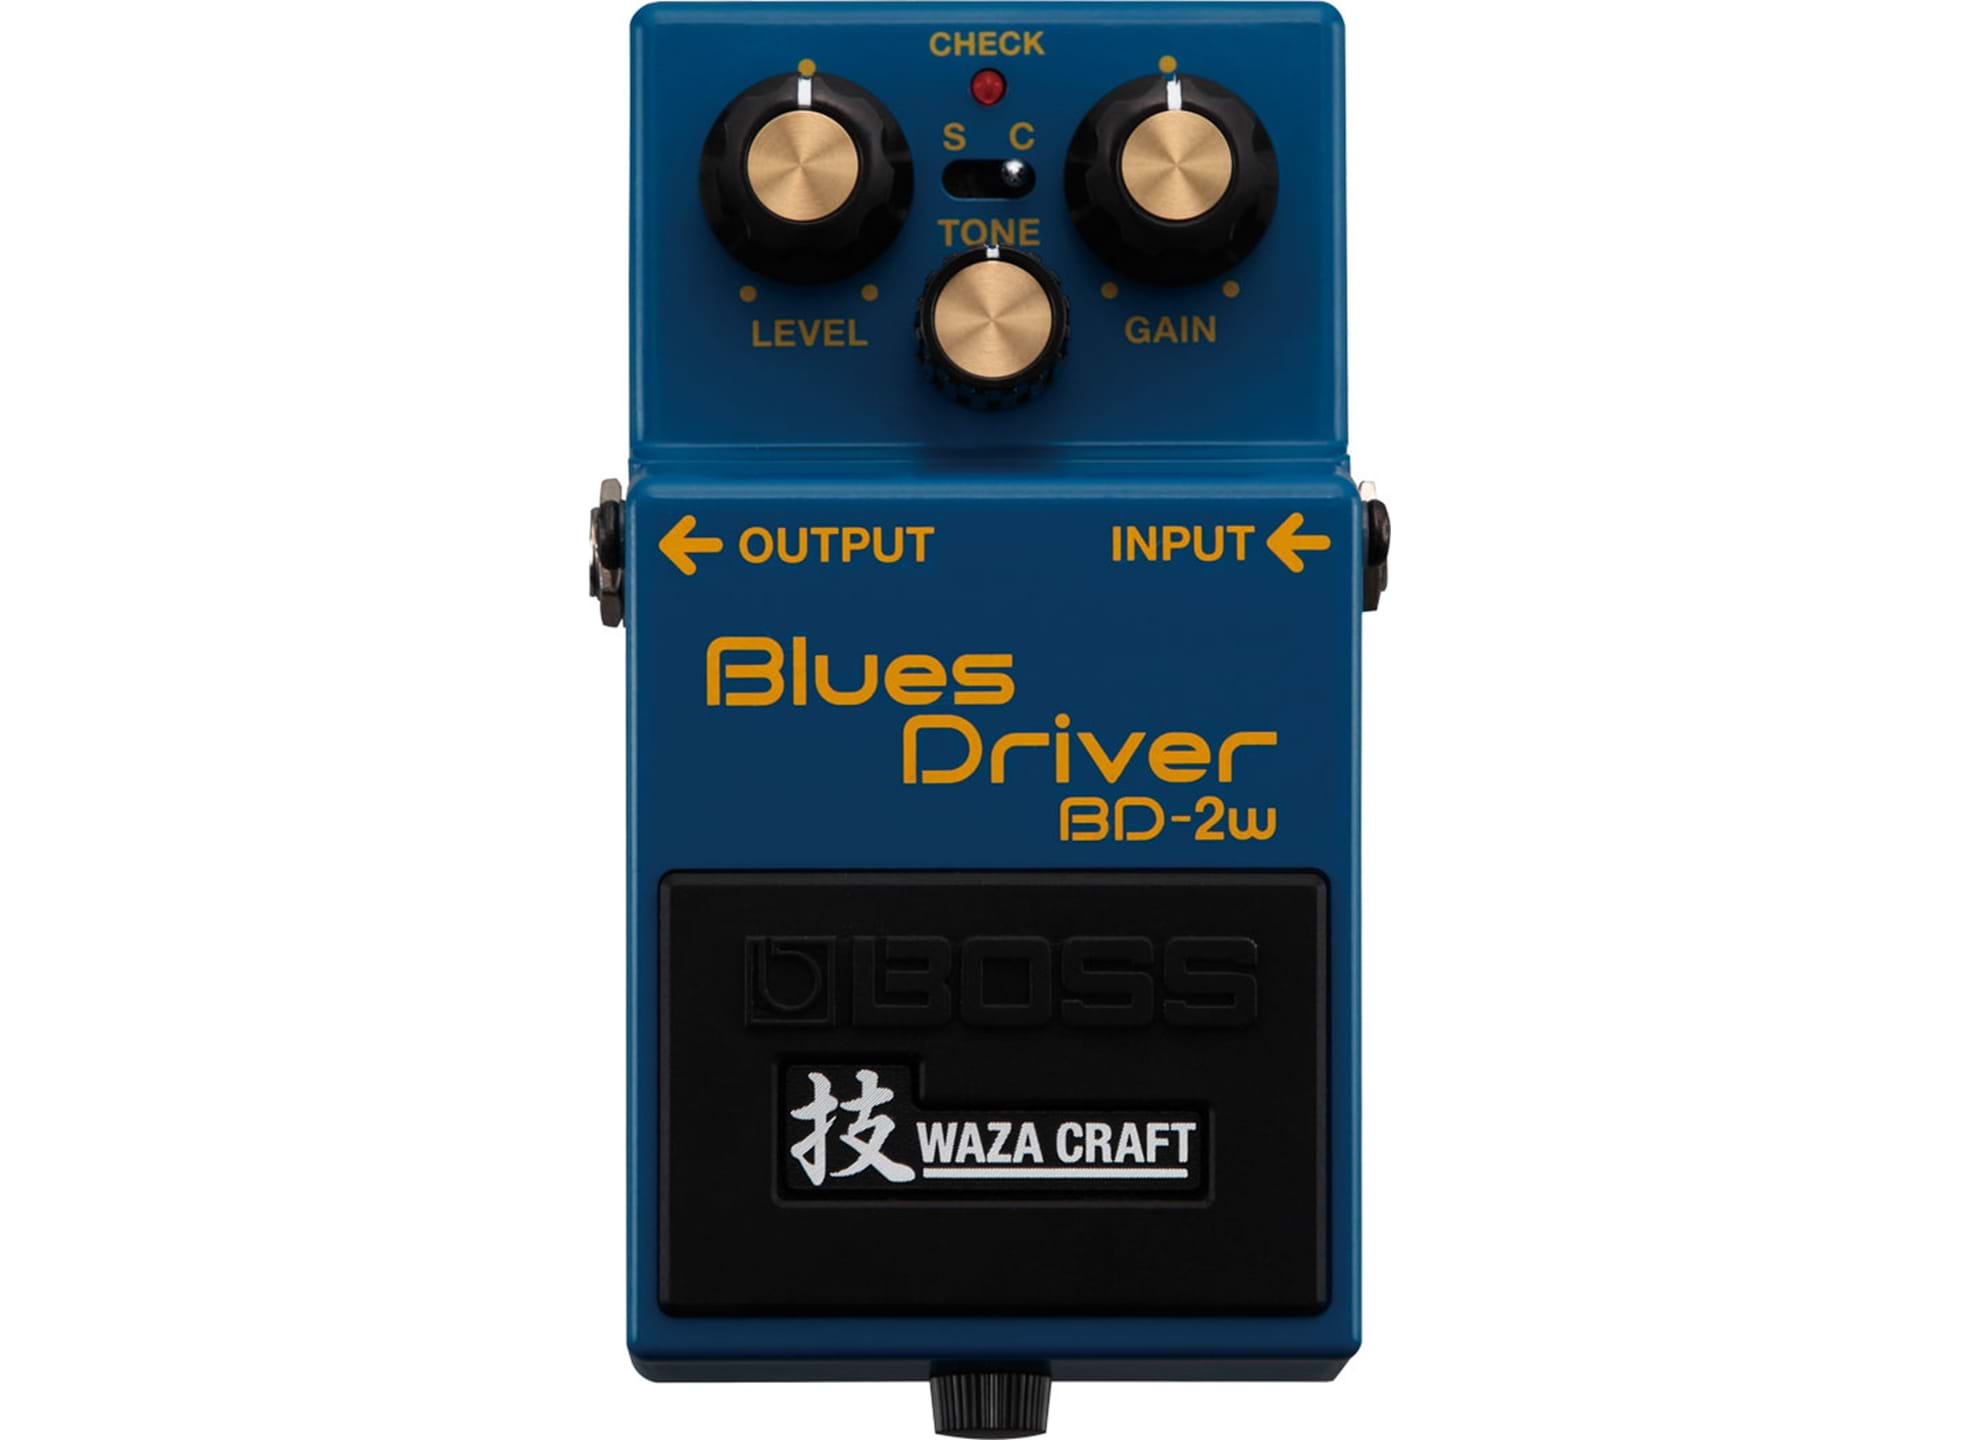 BD-2W Waza Craft Blues Driver